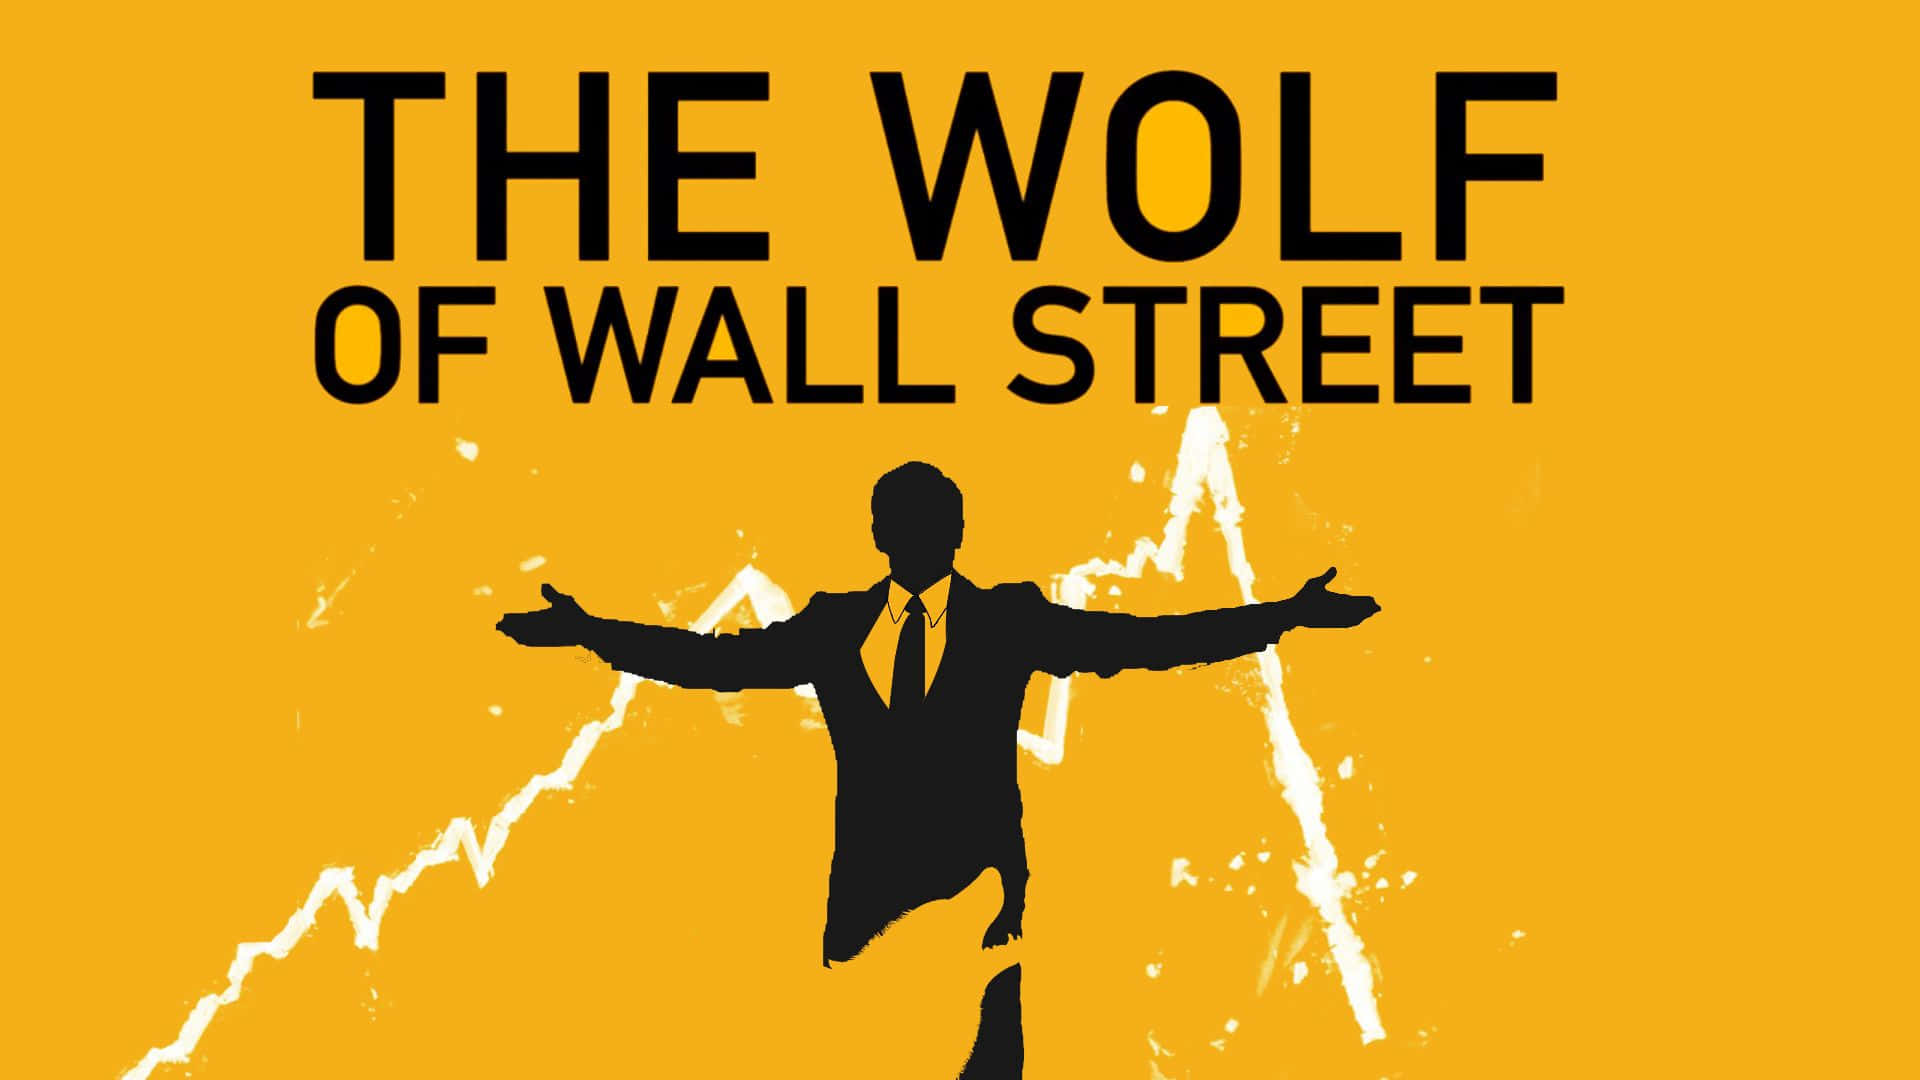 Image Leonardo Dicaprio In Character As Jordan Belfort In The Wolf Of Wall Street Background